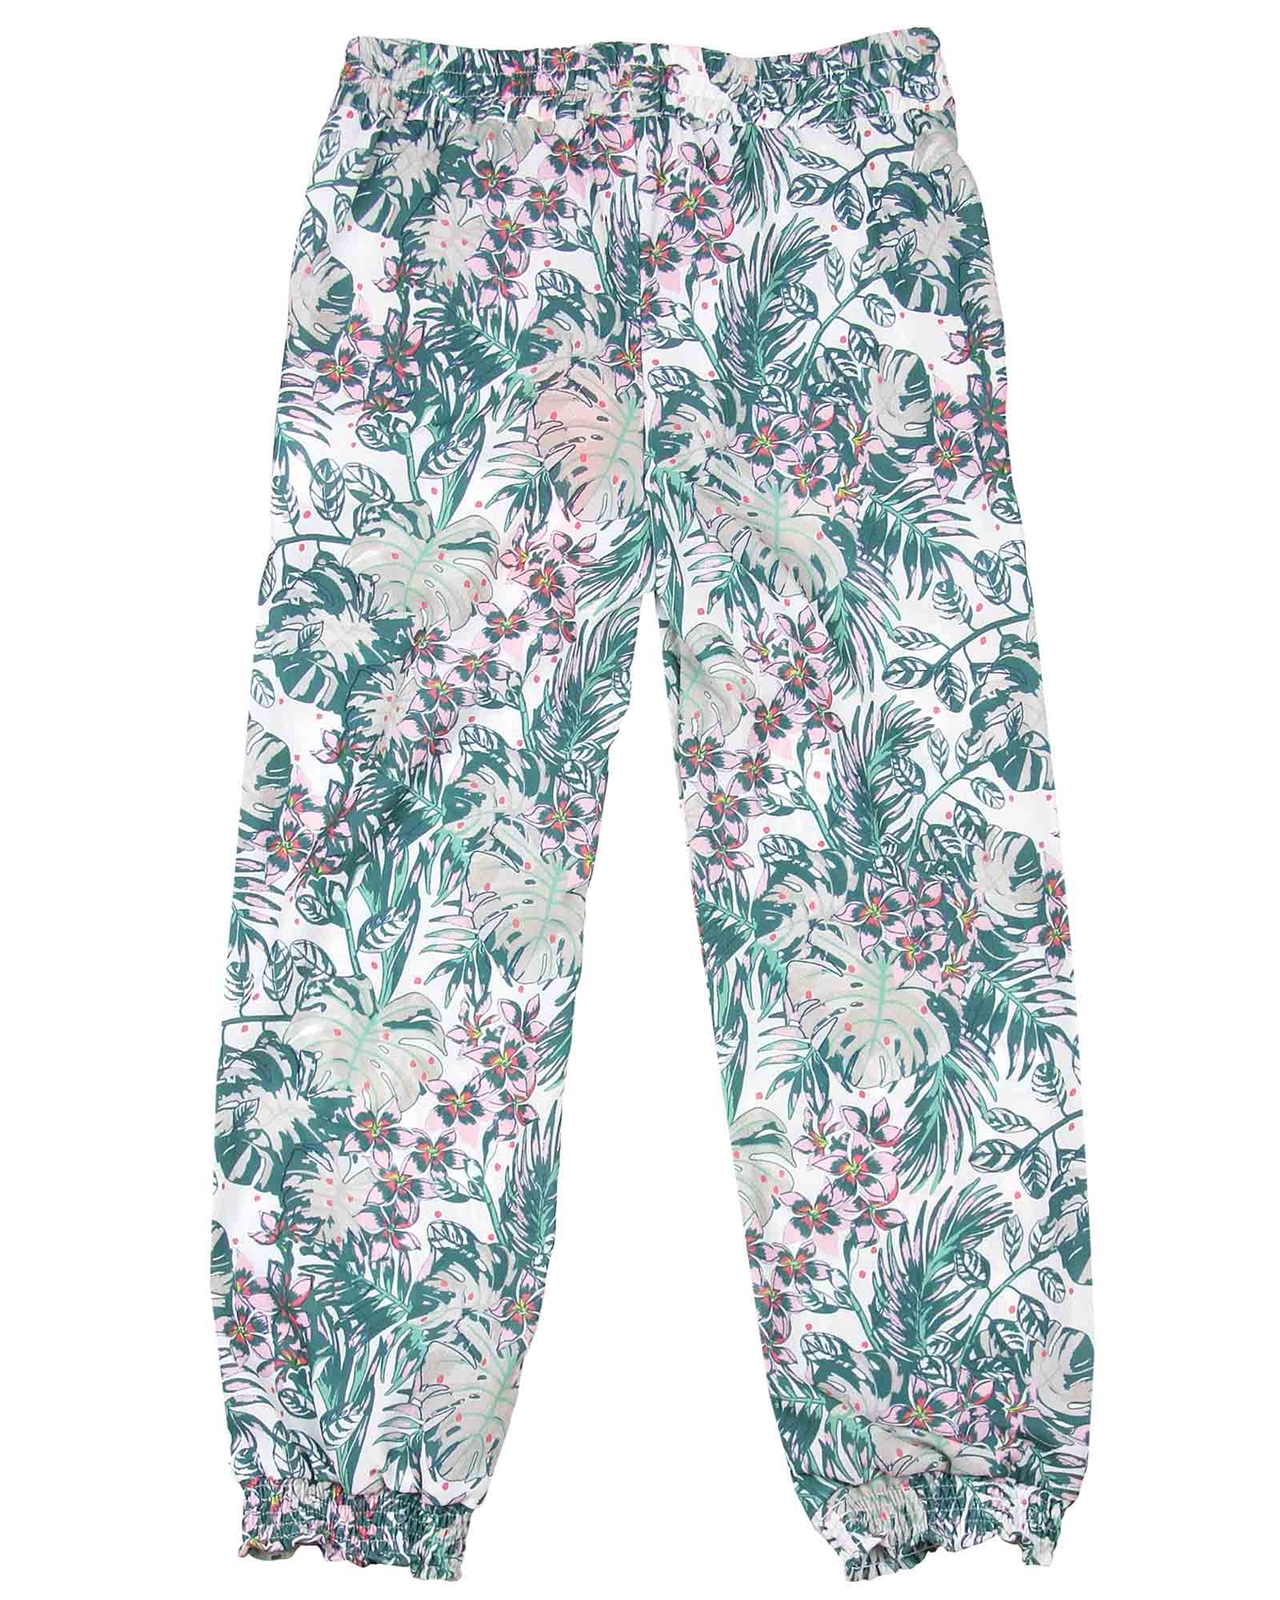 3Pommes Summer Pants in Hawaiian Print - 3Pommes - 3Pommes Spring ...